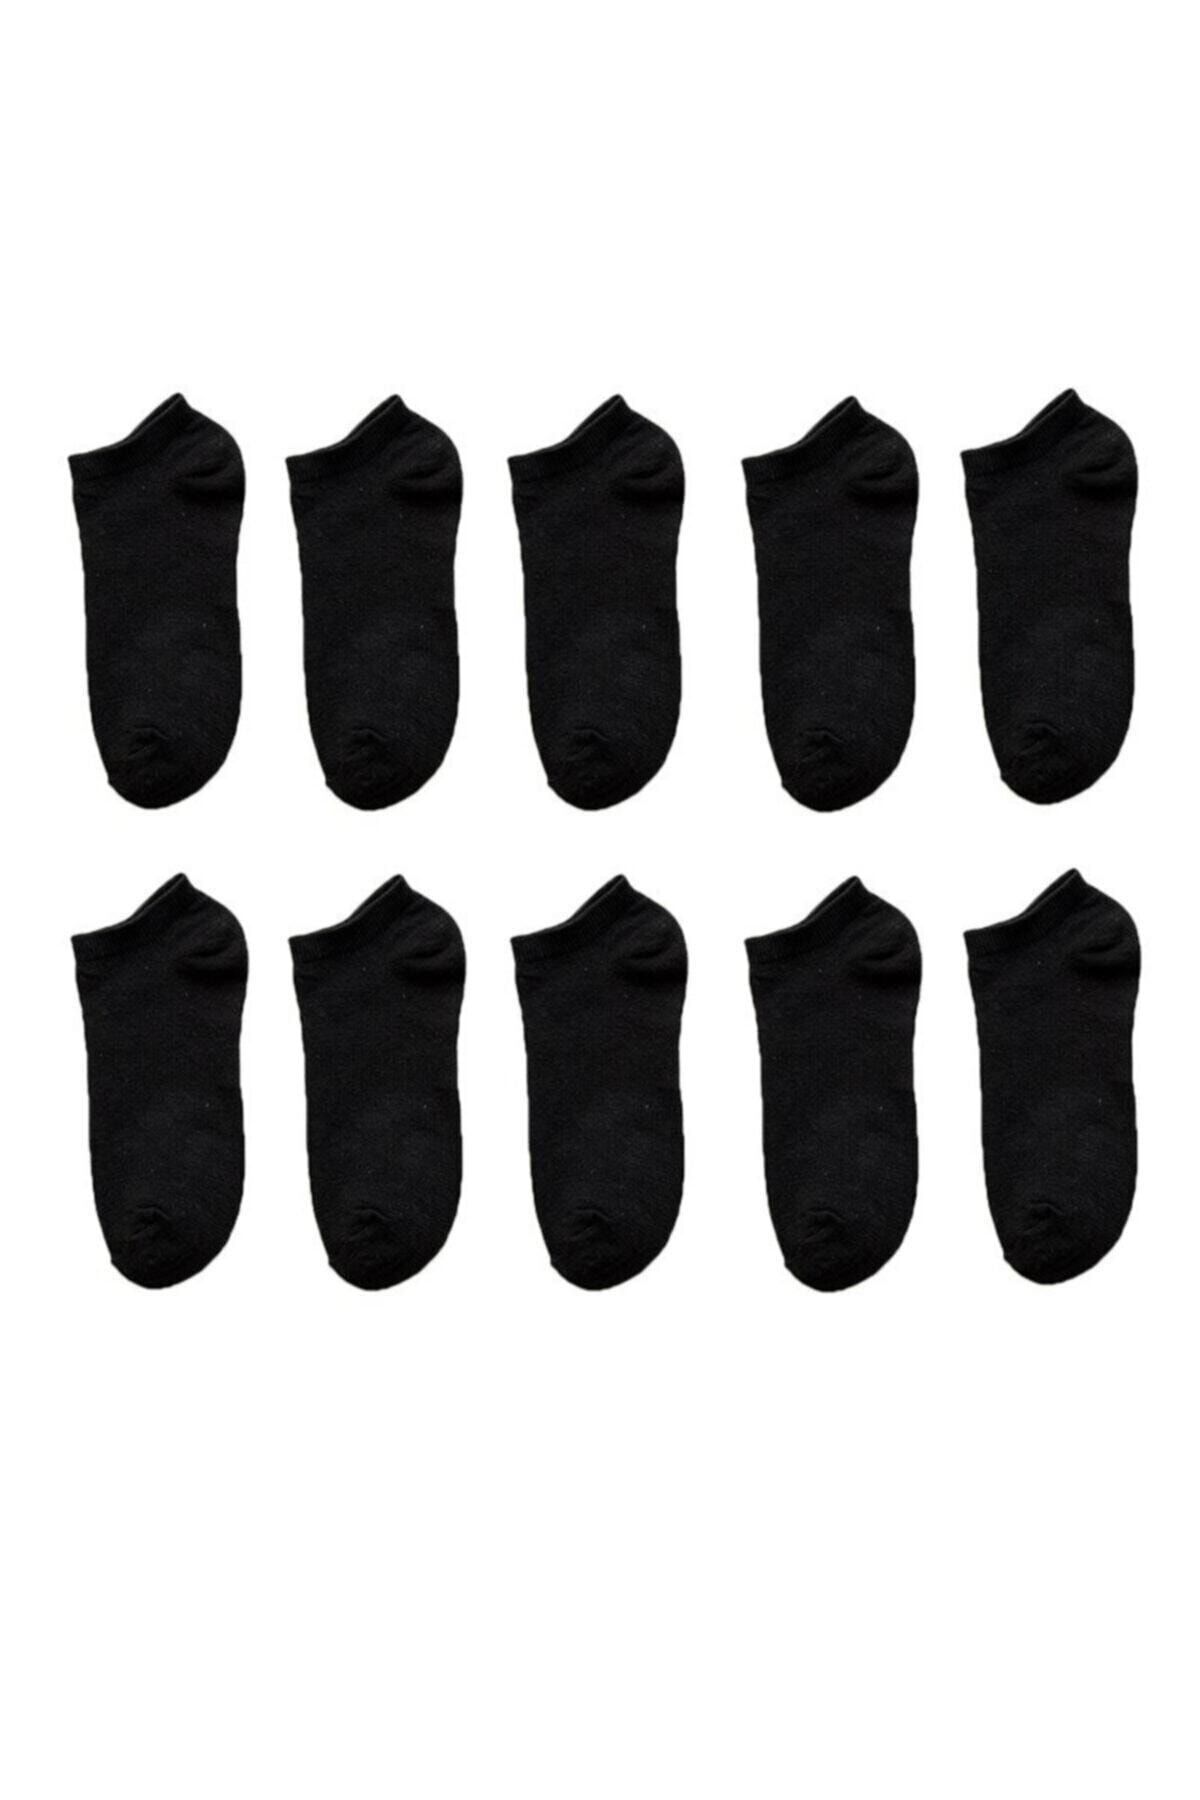 İkonik Socks Kadın 10'lu Siyah Patik Çorap Paketi